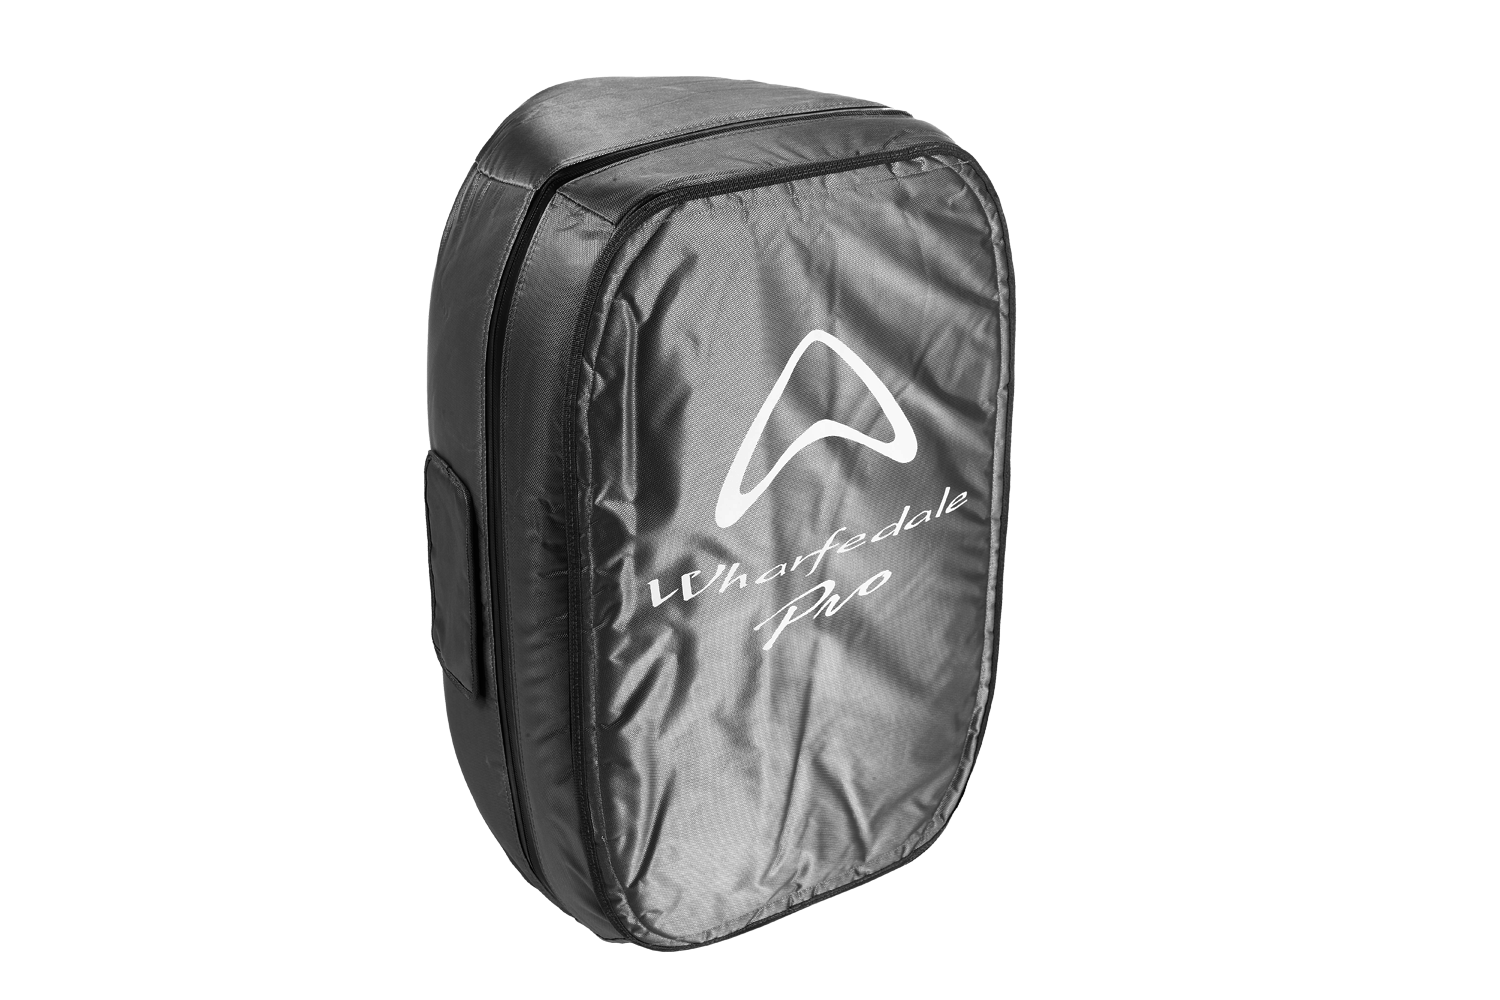 Wharfedale Pro TITAN12BAG - Tour Bag for TITAN12 series speakers